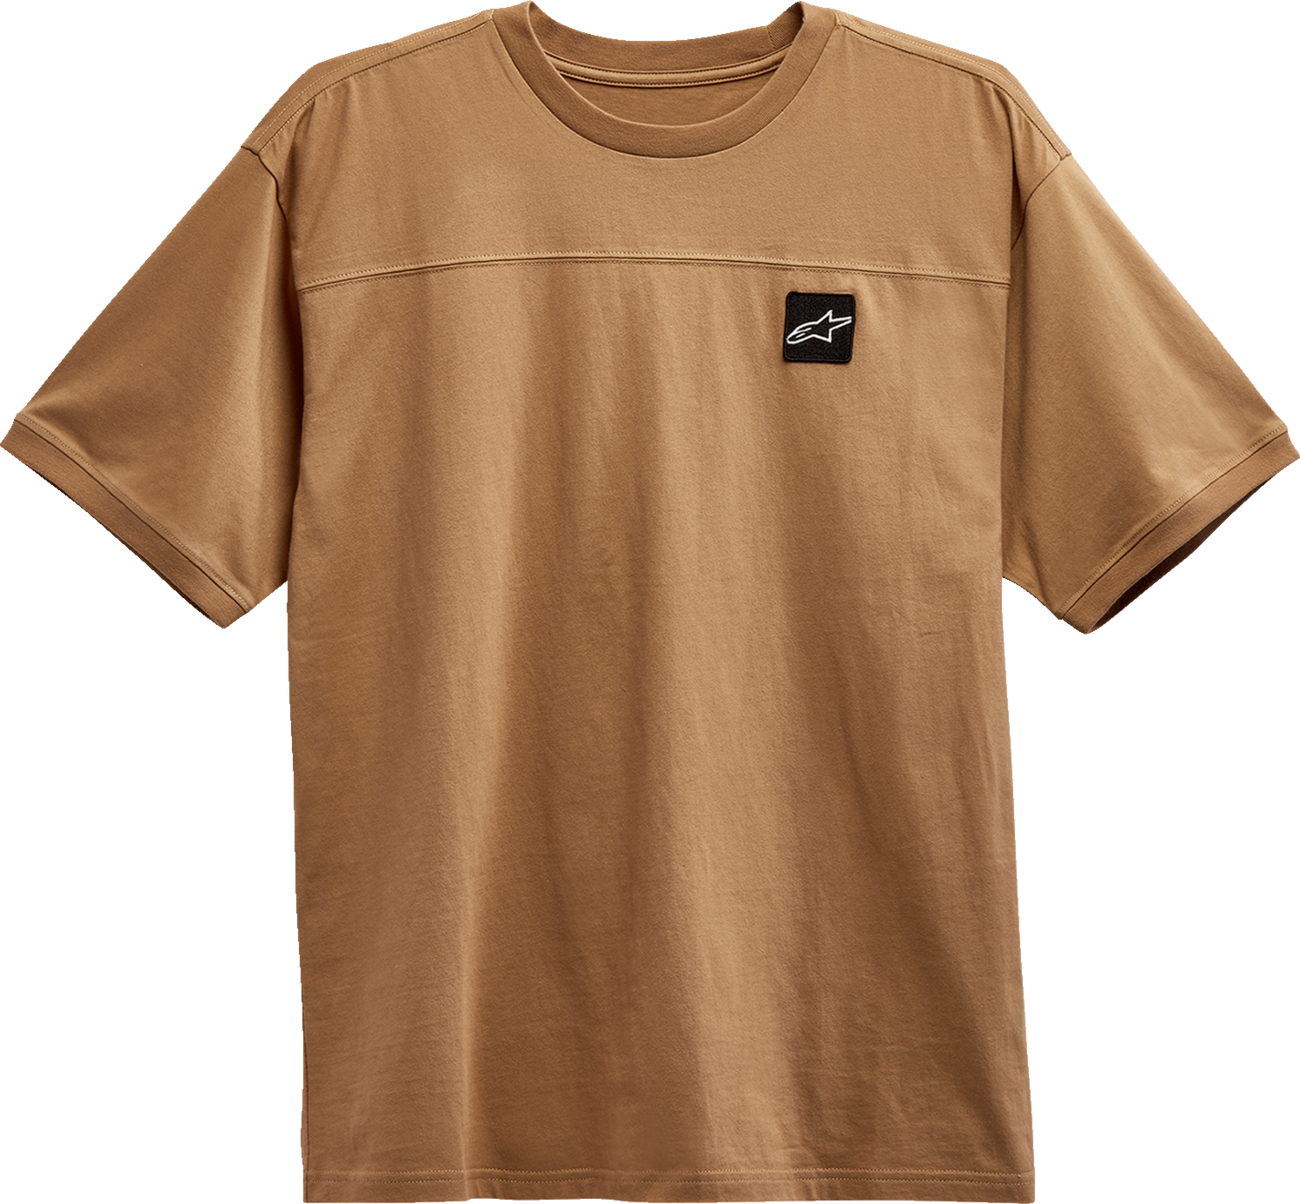 ALPINESTARS Chunk Knit T-Shirt - Sand - Large 12137210223L